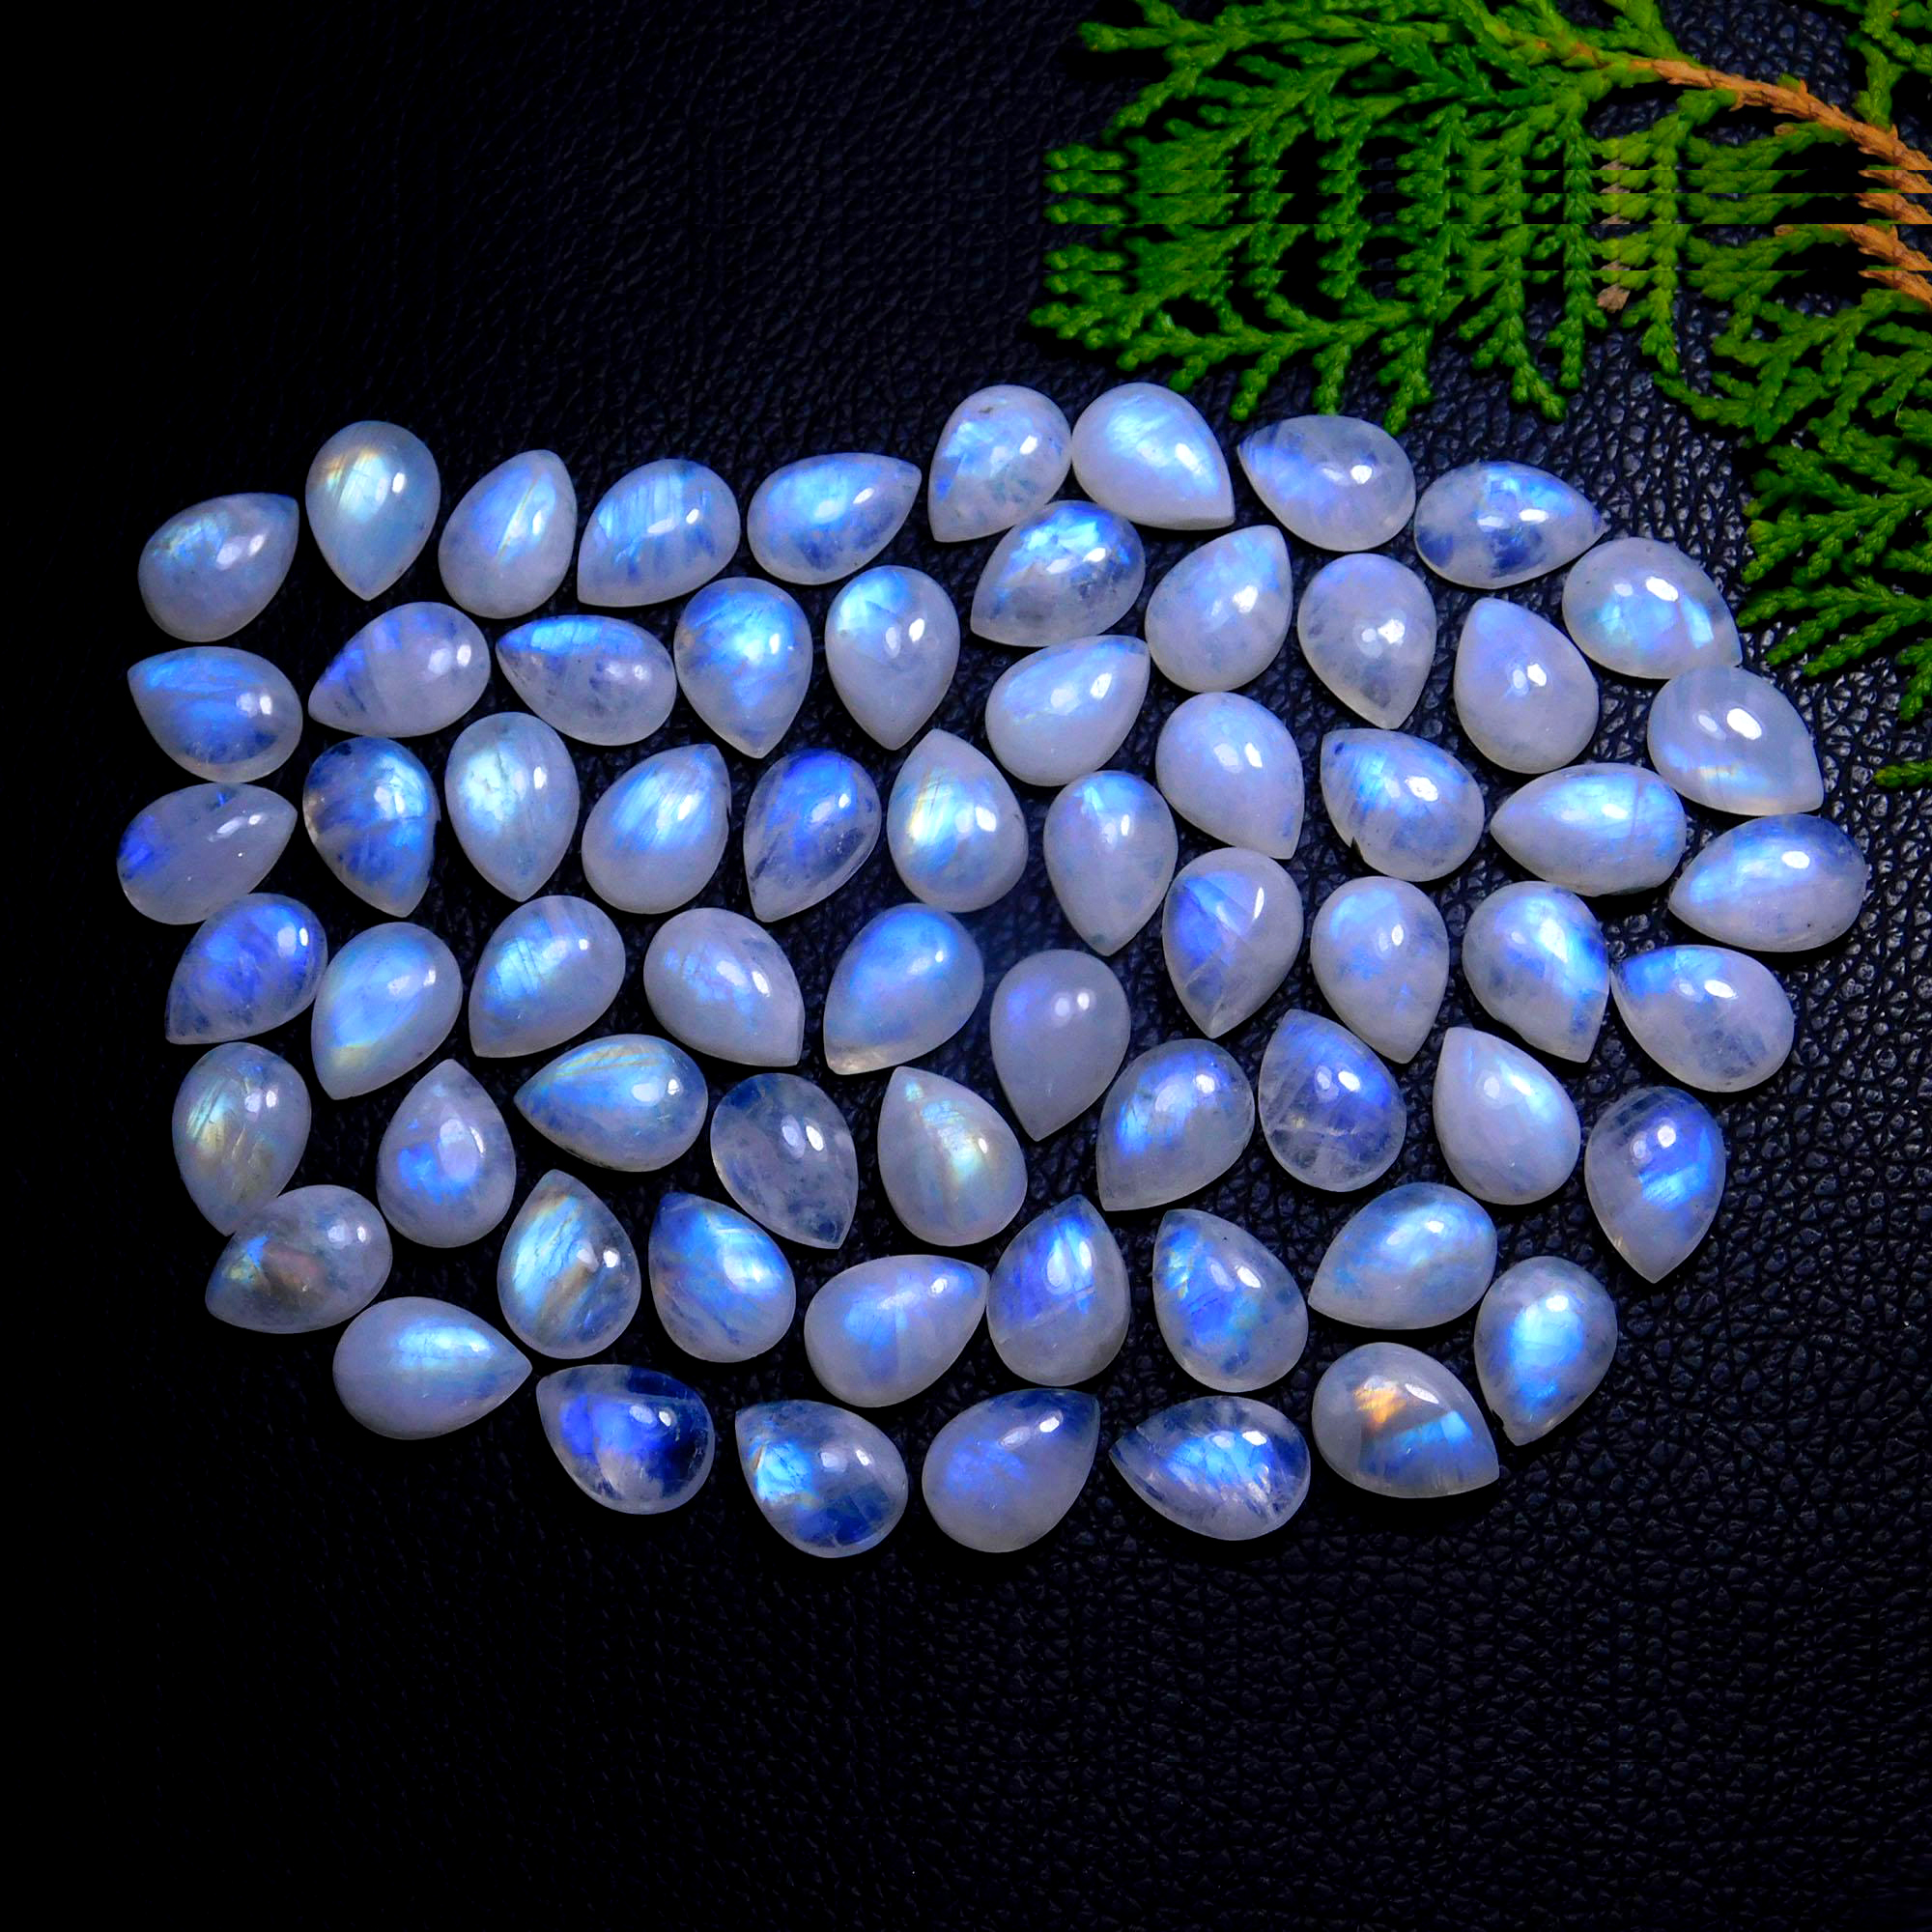 25Pcs 203Cts Natural Rainbow Moonstone Pear Shape Blue Fire Cabochon Lot Semi Precious Loose Gemstone Jewelry Supplies Crystal 16X12mm #9873